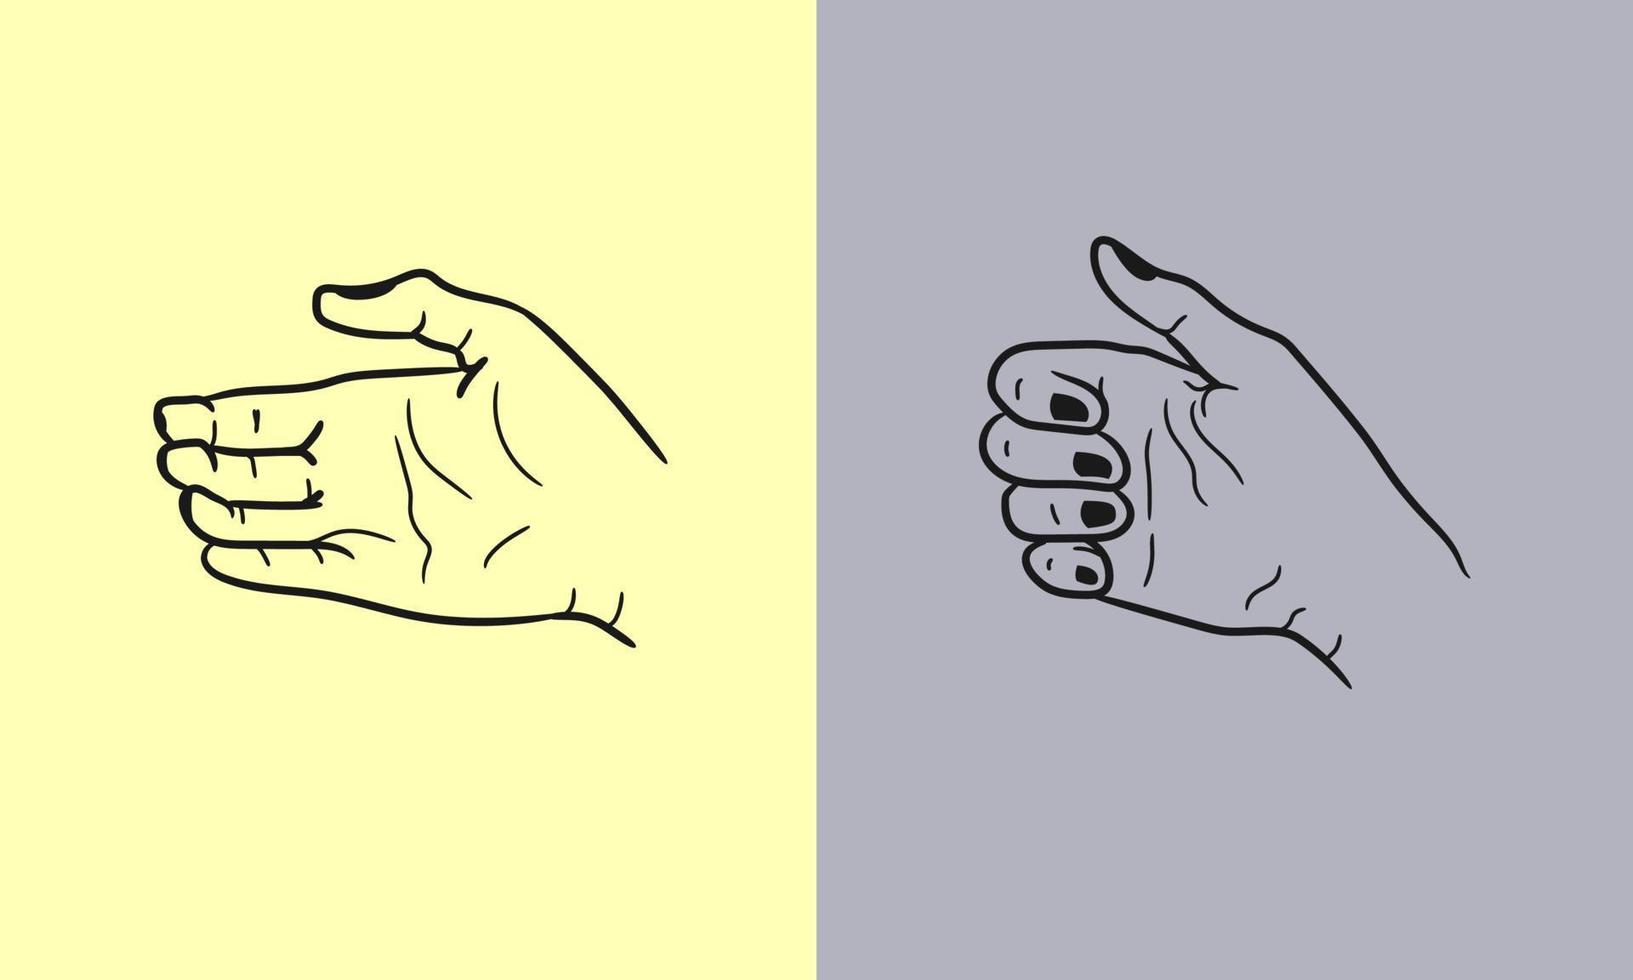 innehav objekt tecken av hand gester vektor illustration mall. realistisk gest linje konst av mänsklig hand. isolerat på bakgrund. vektor eps 10.